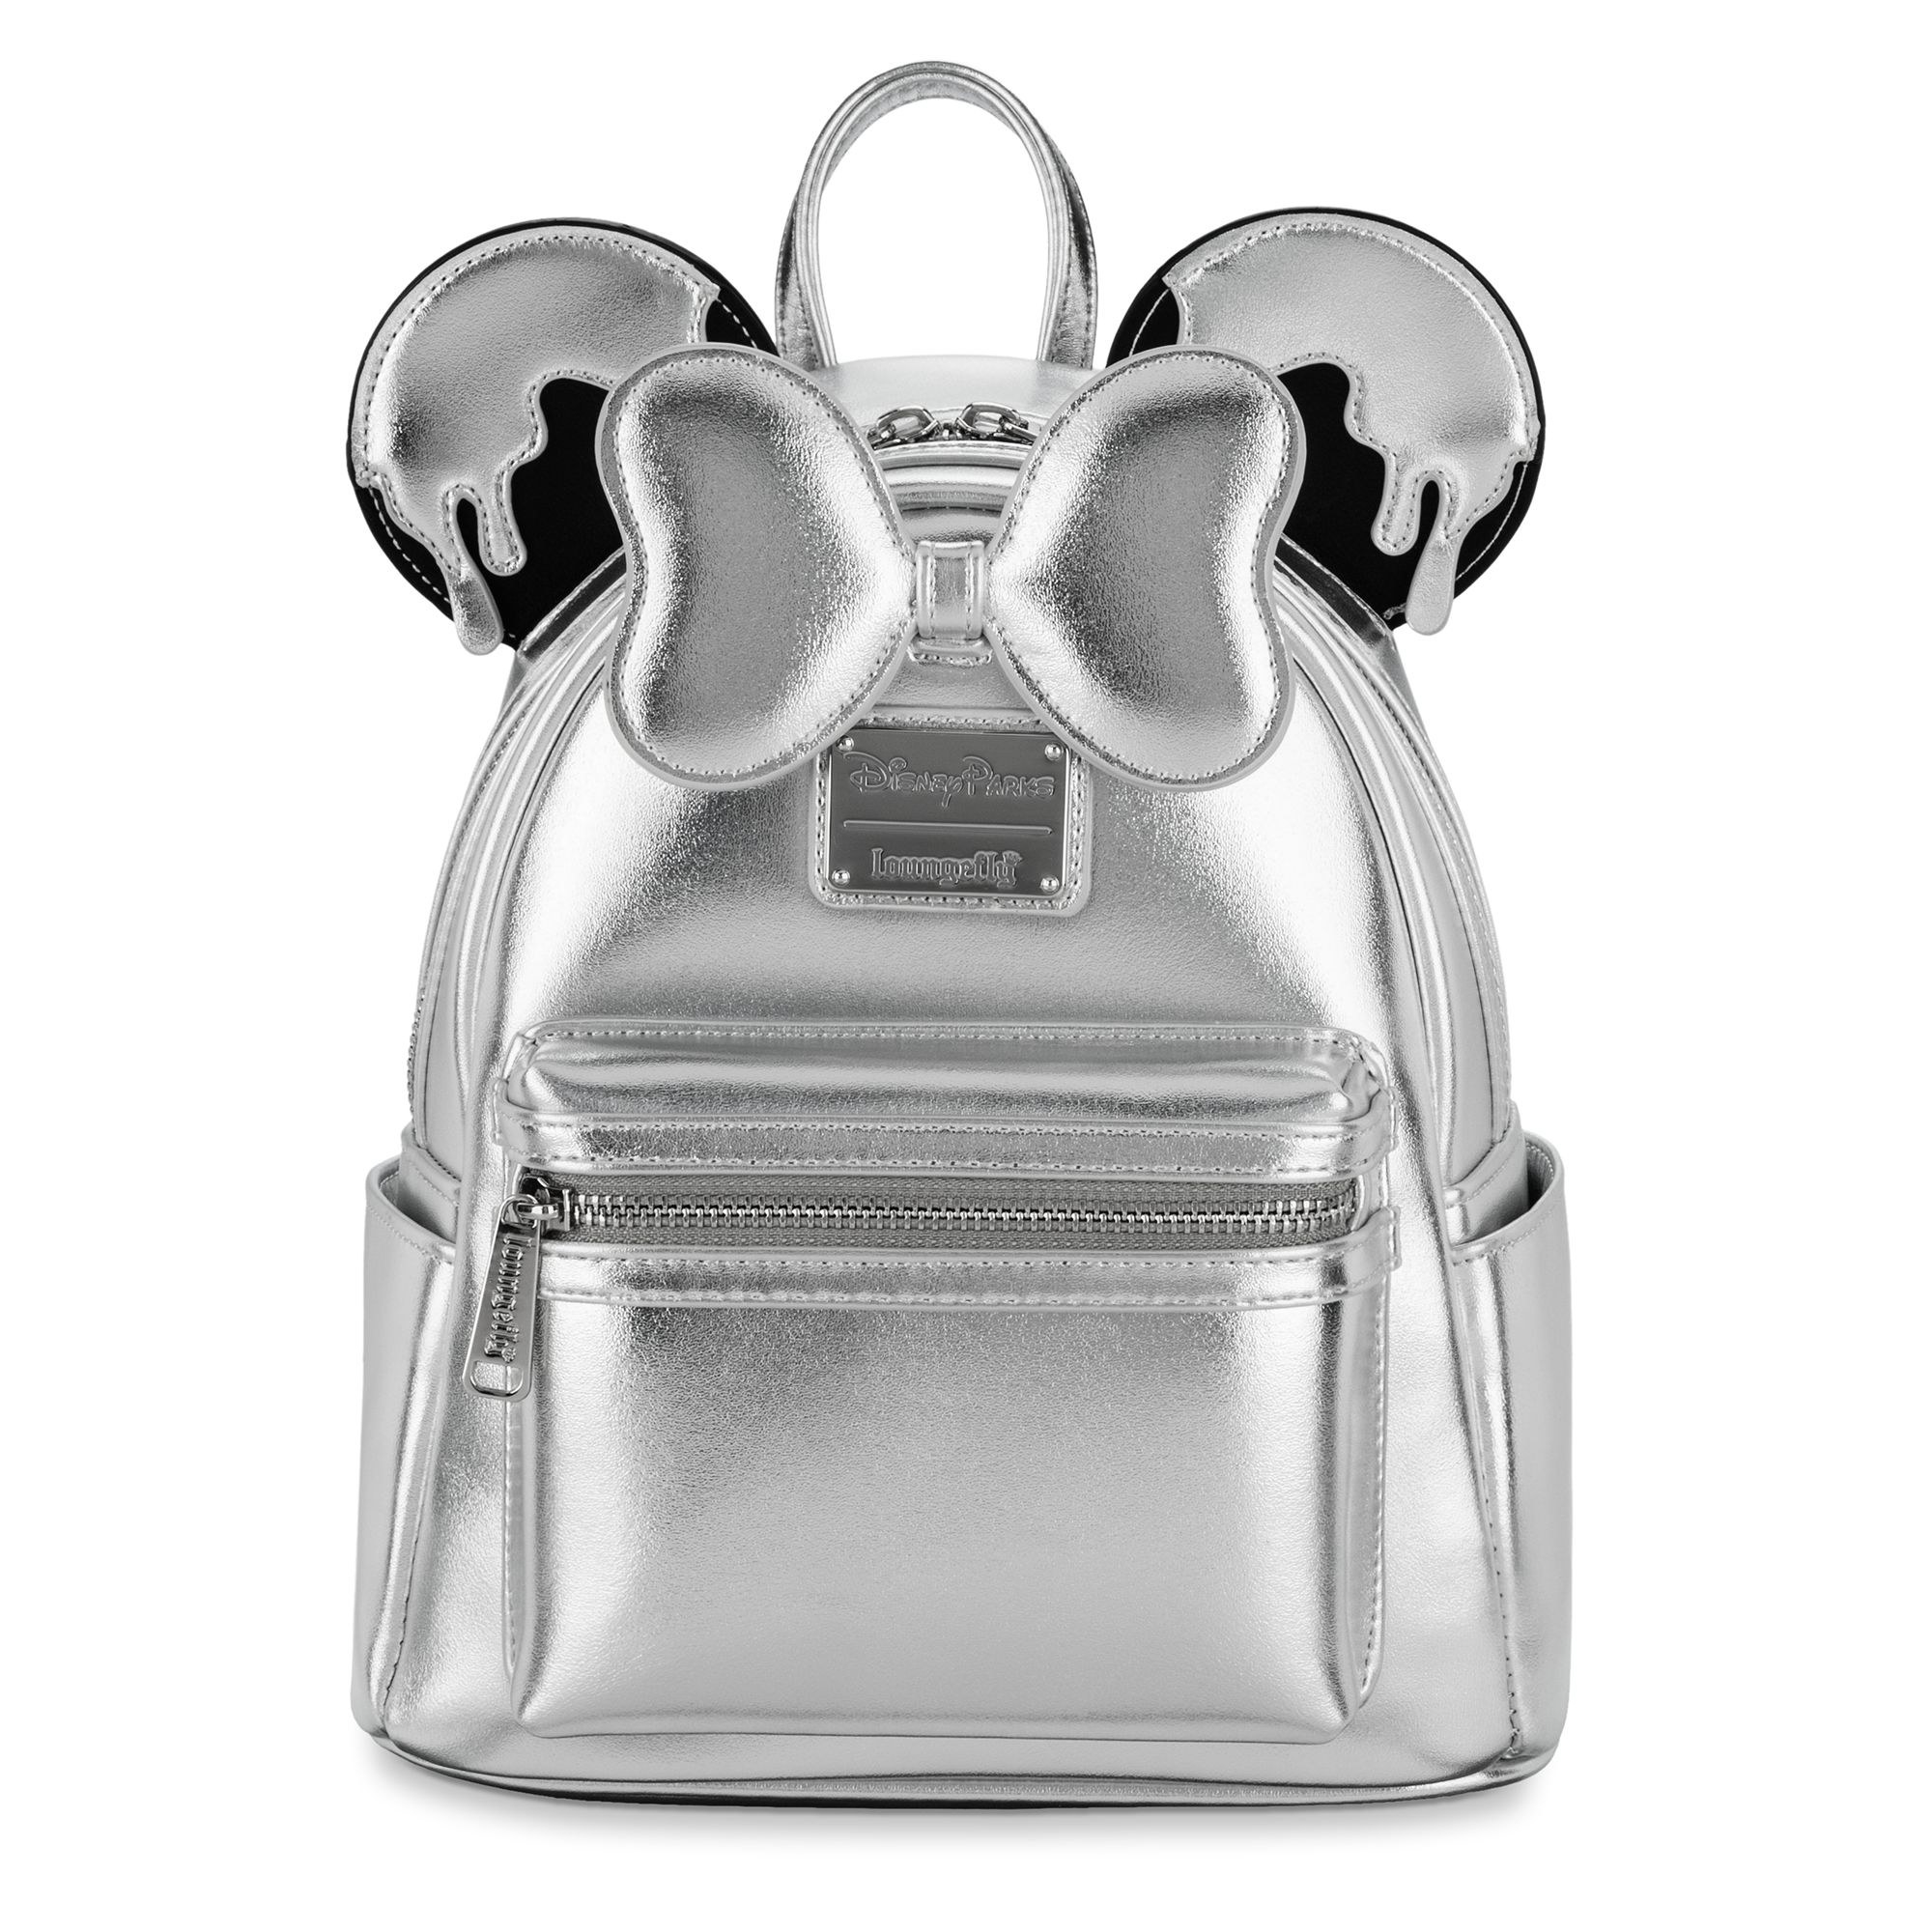 Platinum Disney backpack